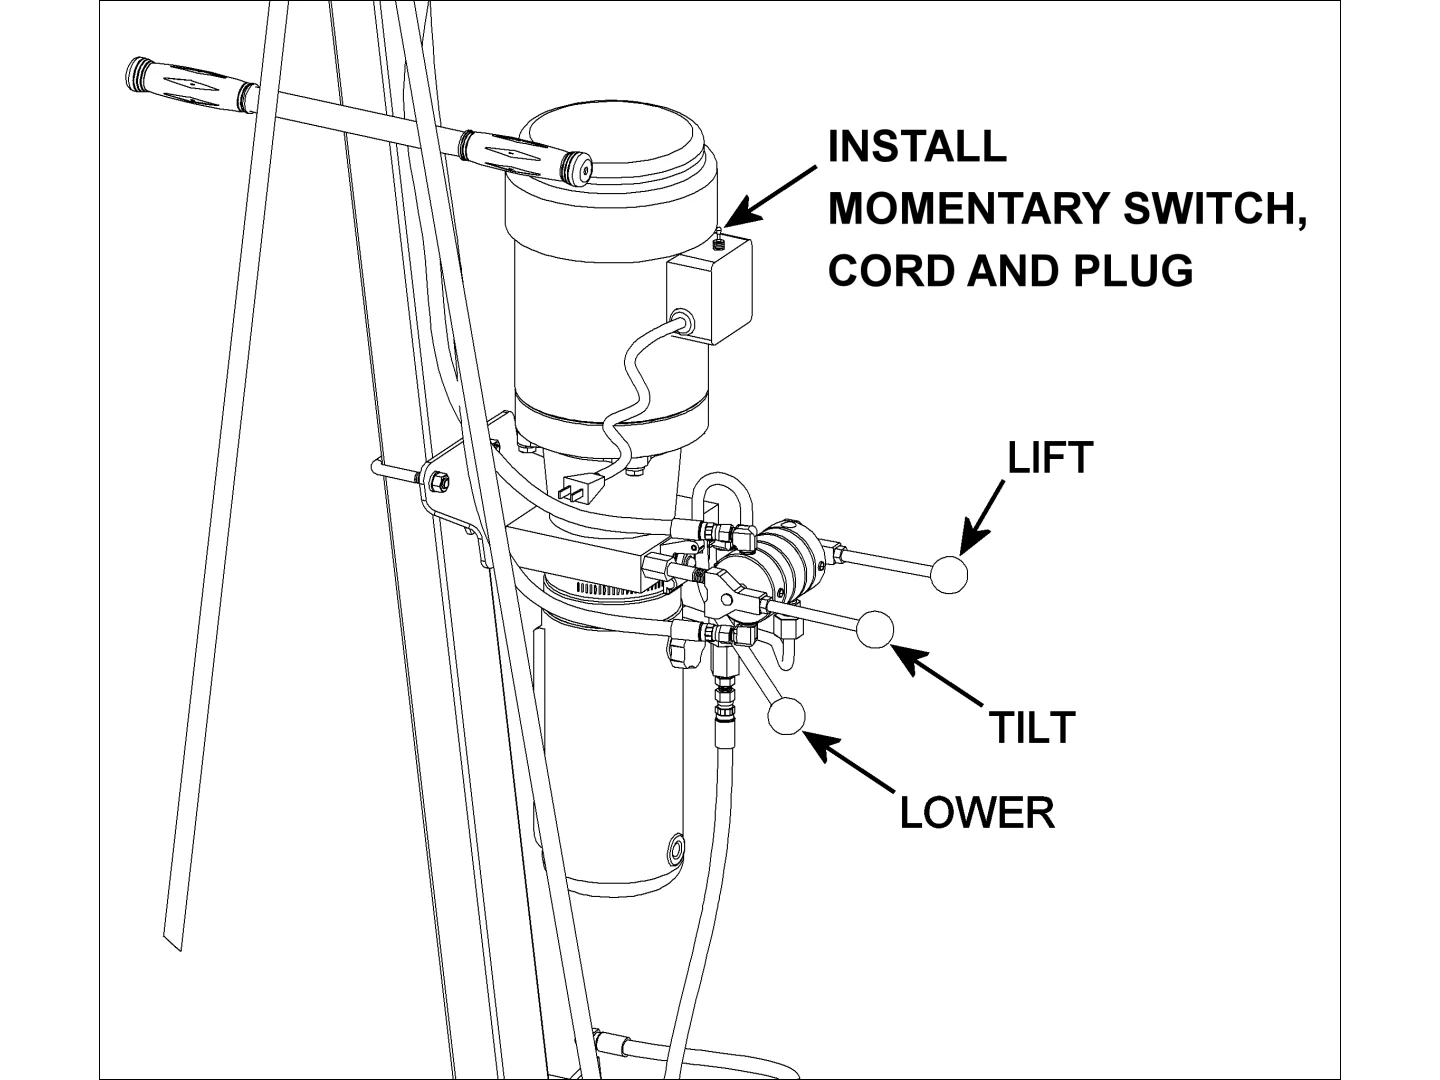 Drum Lift, Tilt and Lower Controls